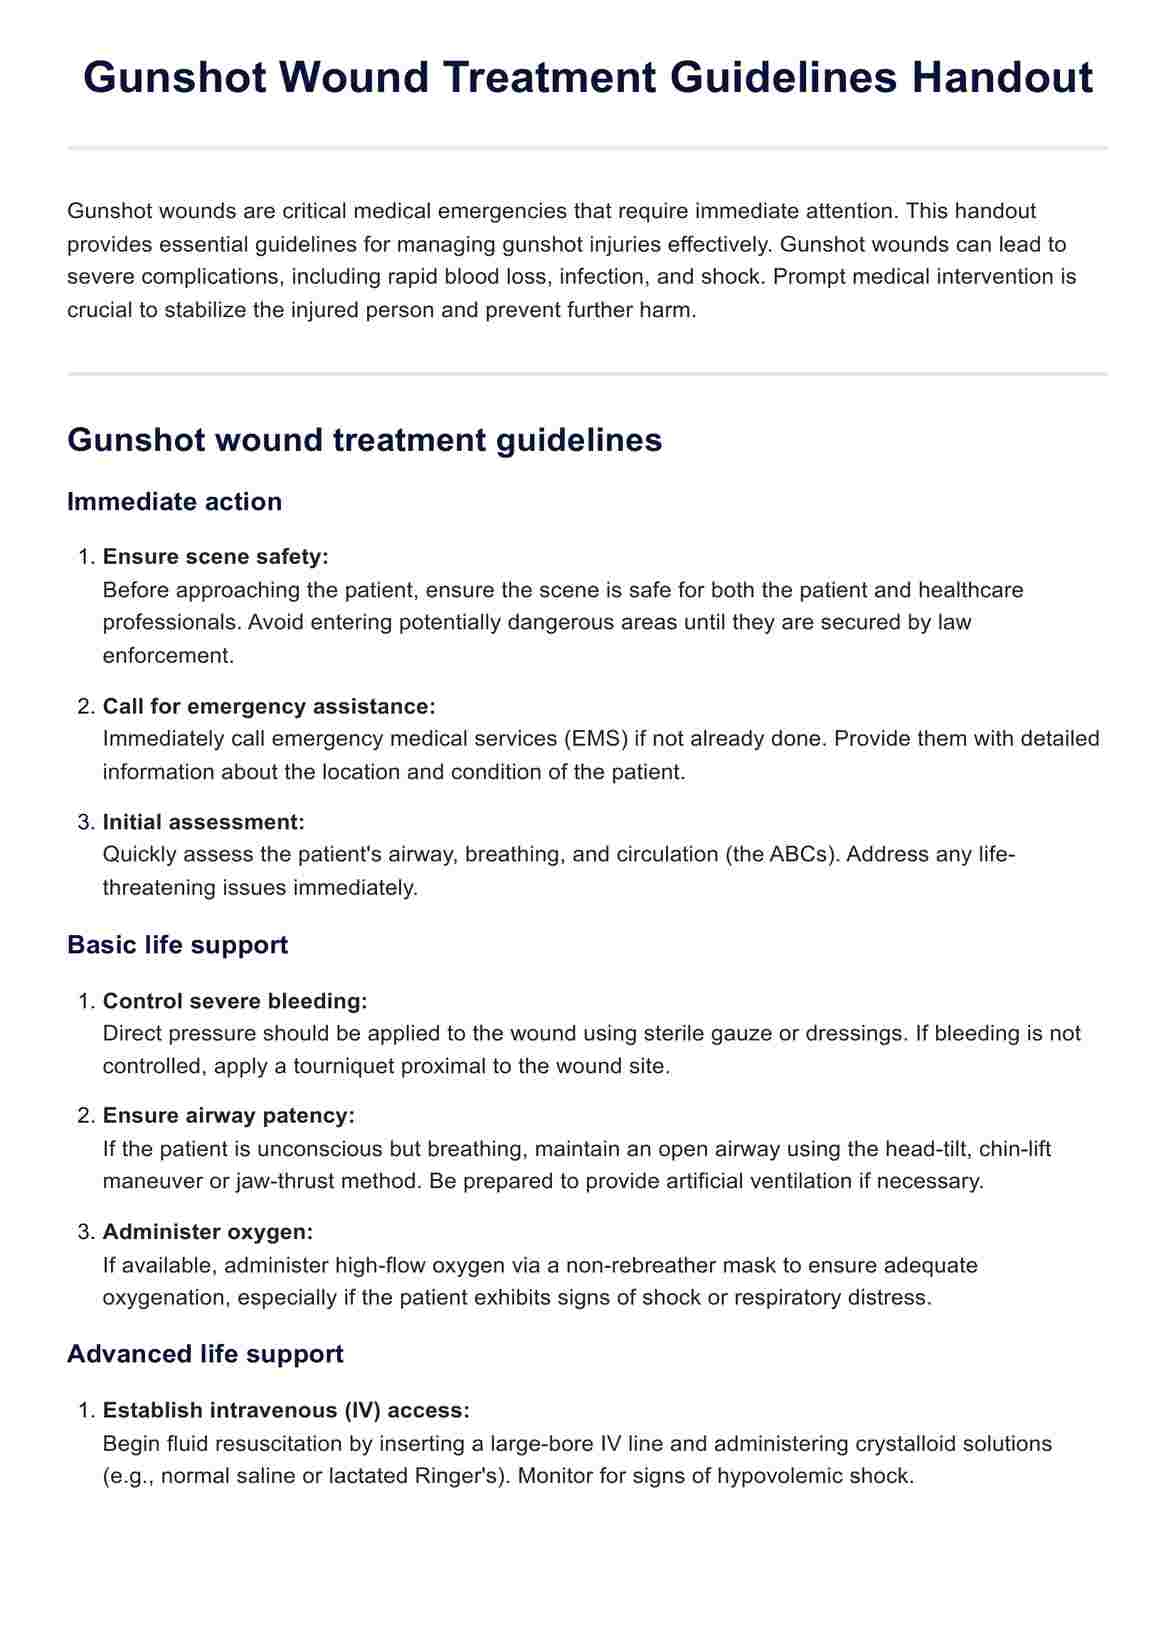 Gunshot Wound Treatment Guidelines Handout PDF Example